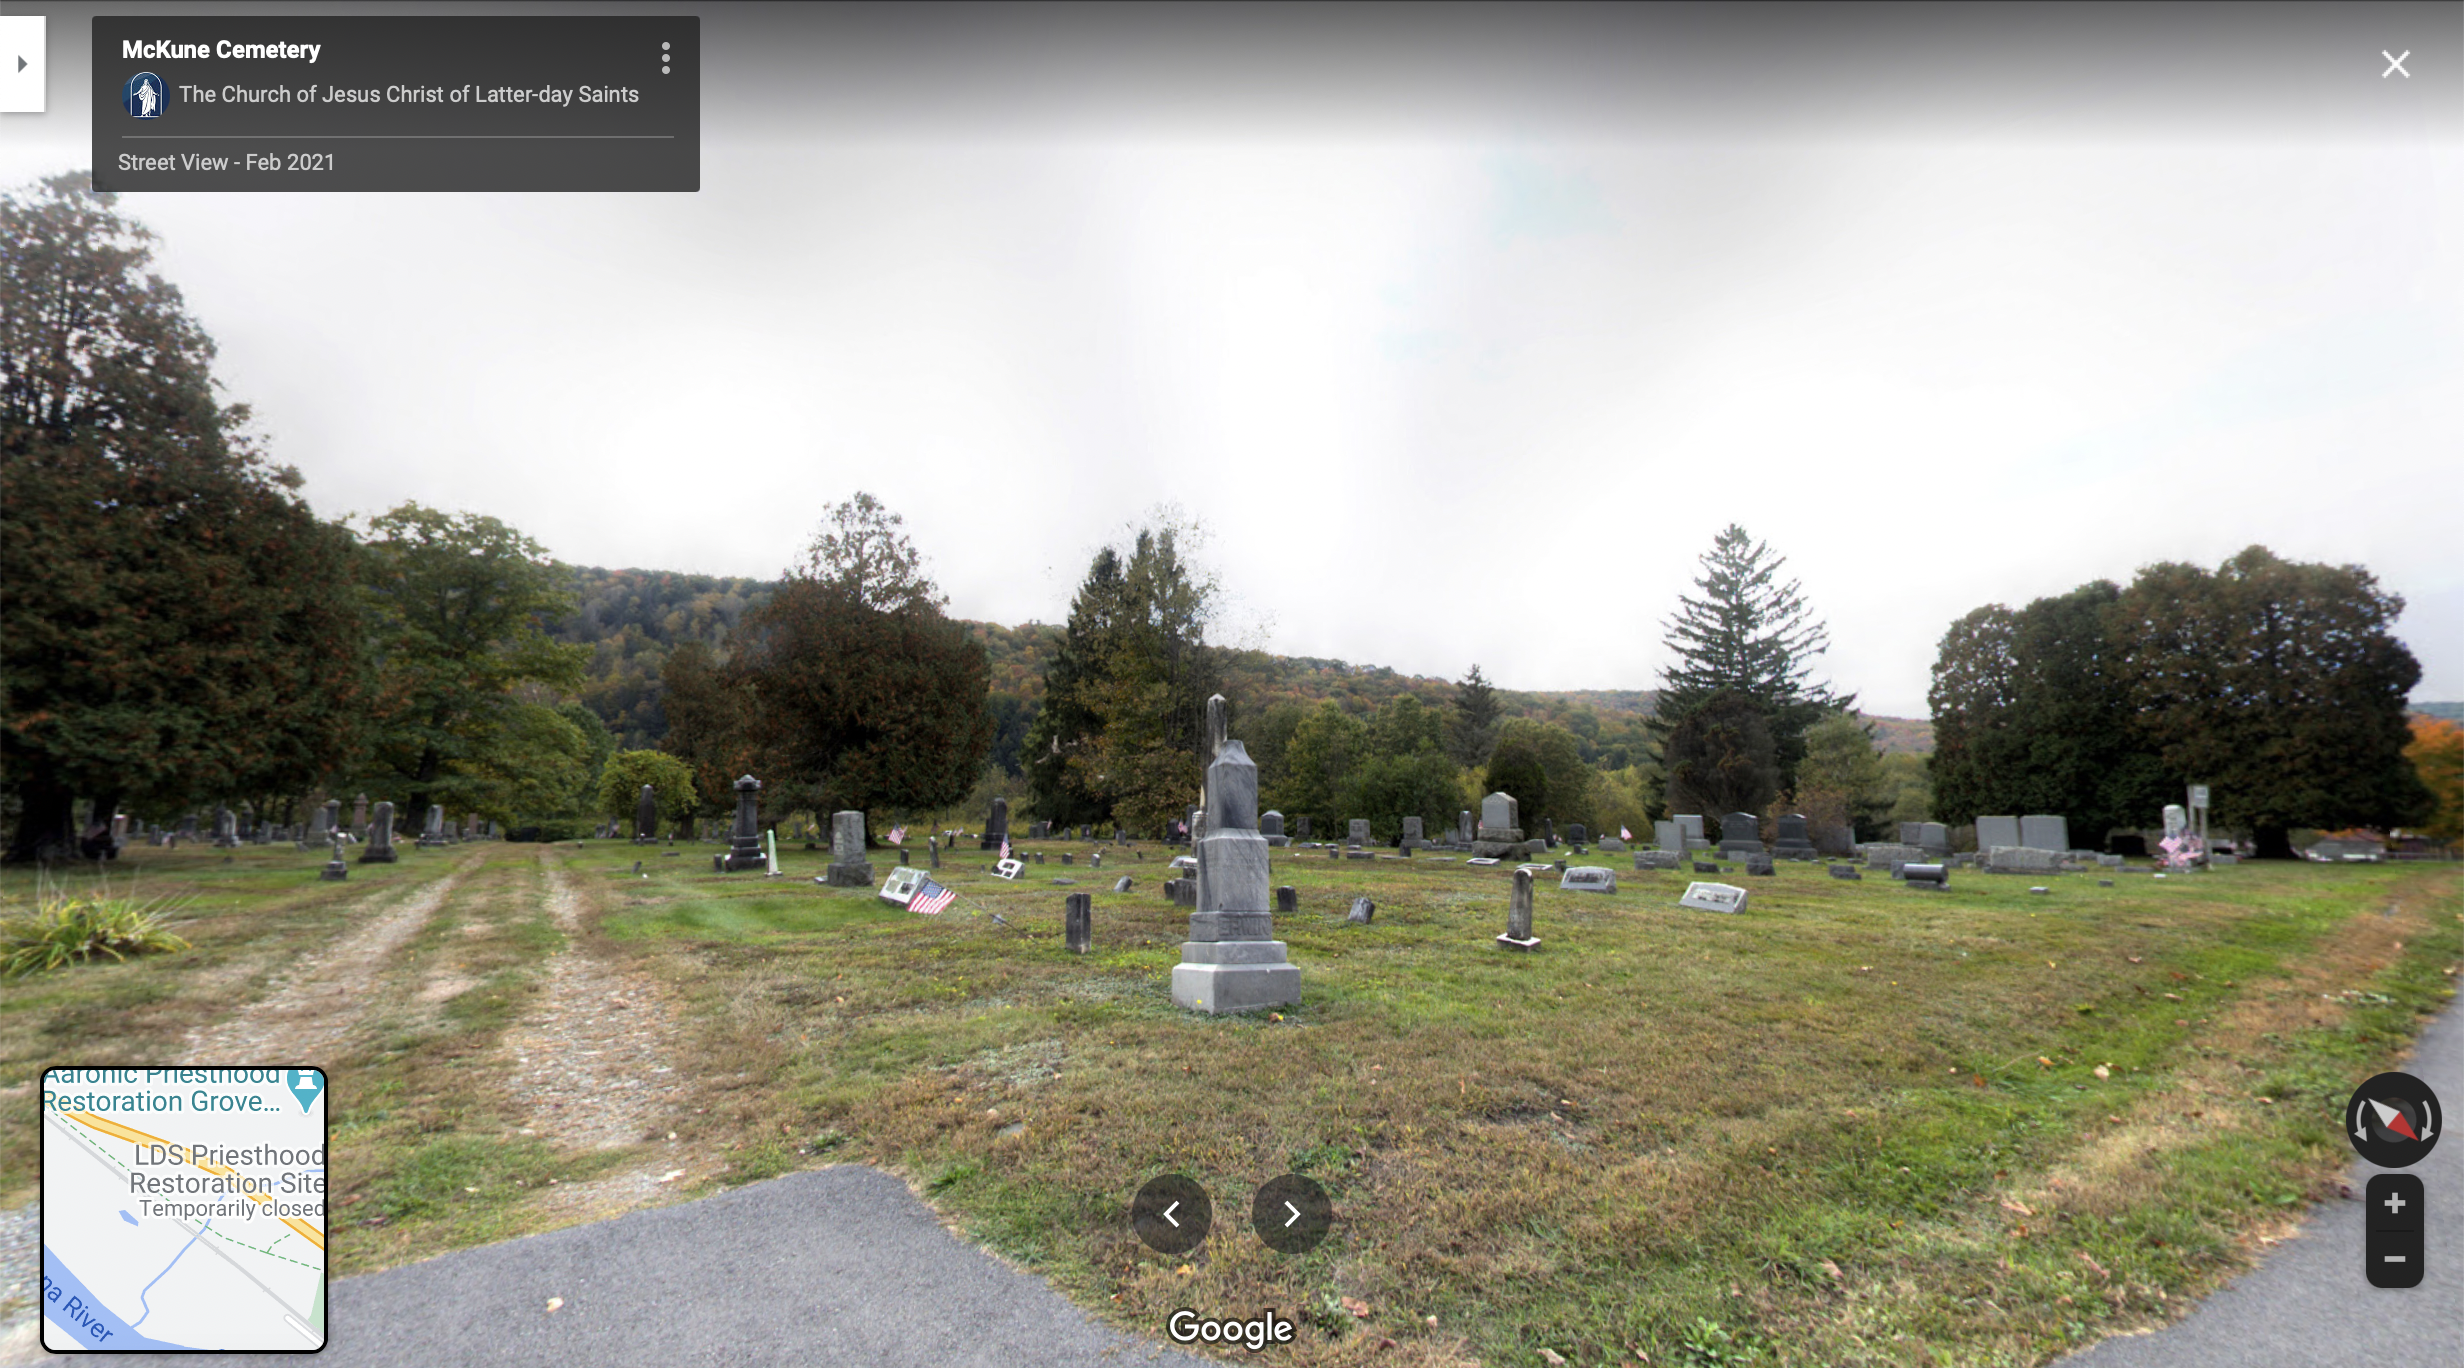 Screenshot of the Google Maps 360 view of McKune Cemetery